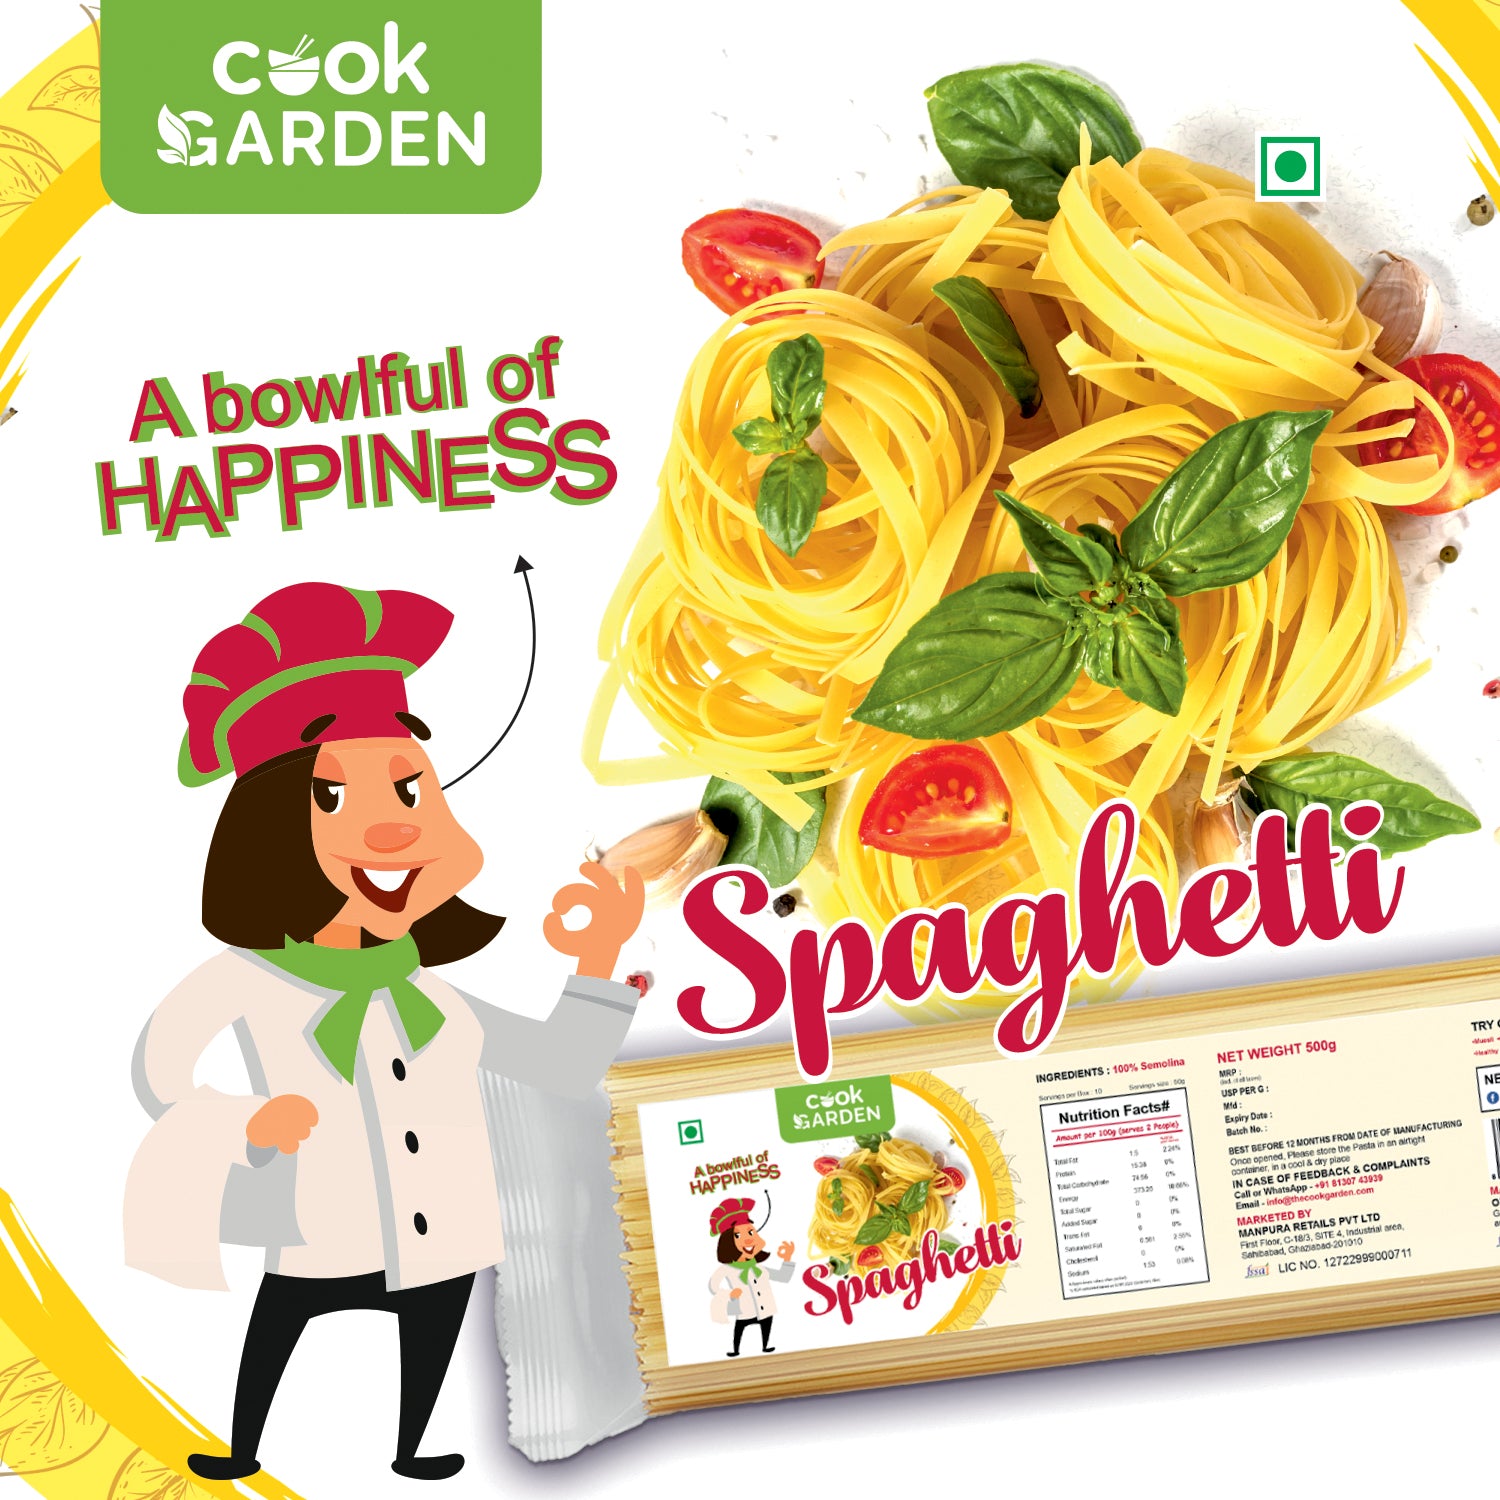 100% Semolina Spaghetti and Fusilli Pasta |High Protein Healthy Diet|Maida & Cholesterol Free, (Pack of 2)